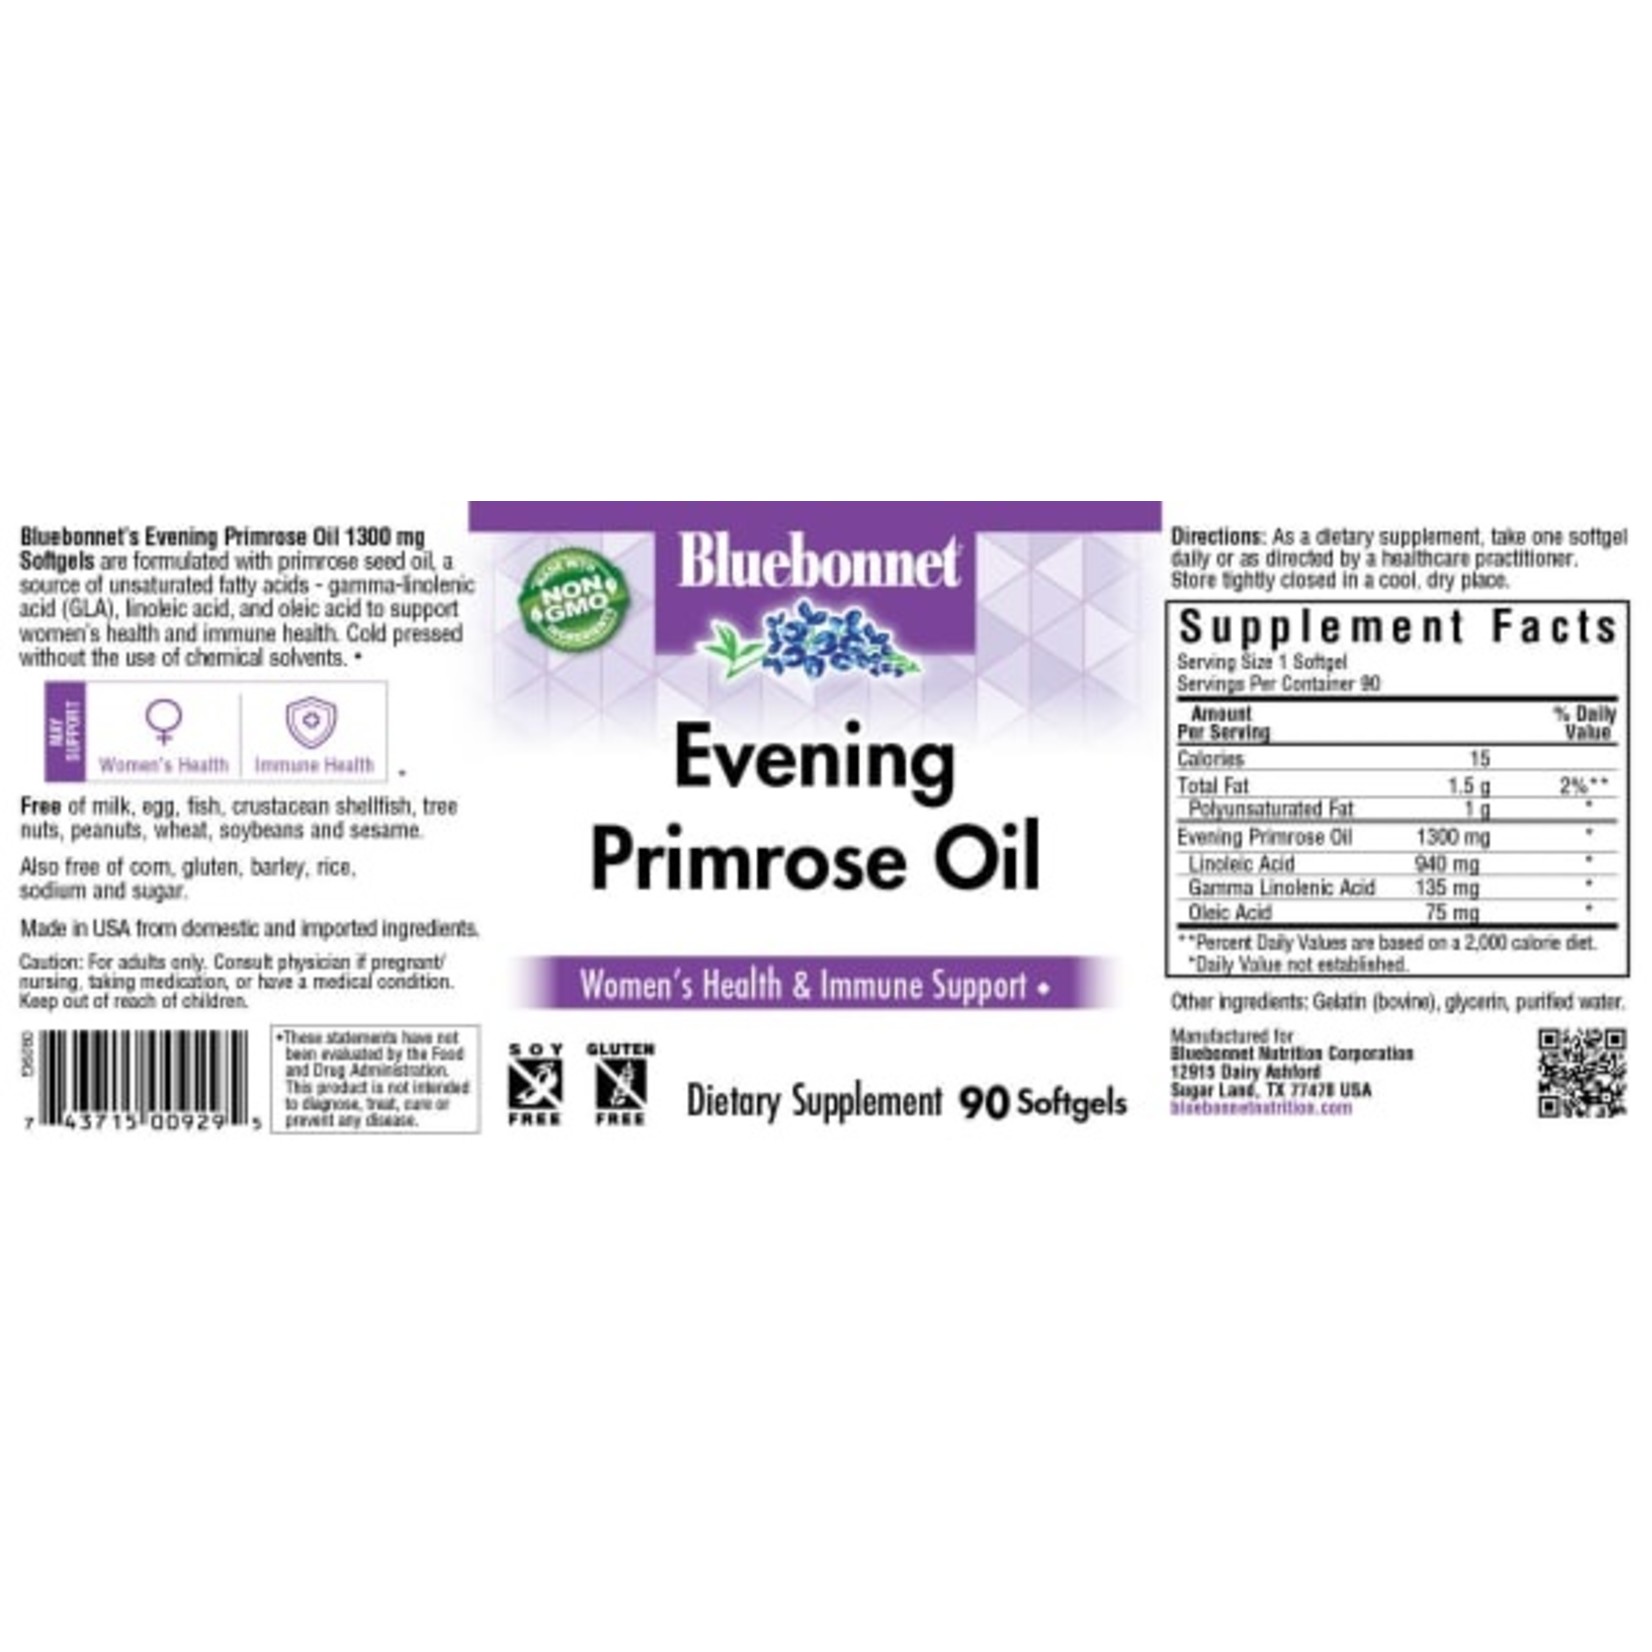 Bluebonnet Bluebonnet - Evening Primrose Oil 1 300 mg - 90 Softgels